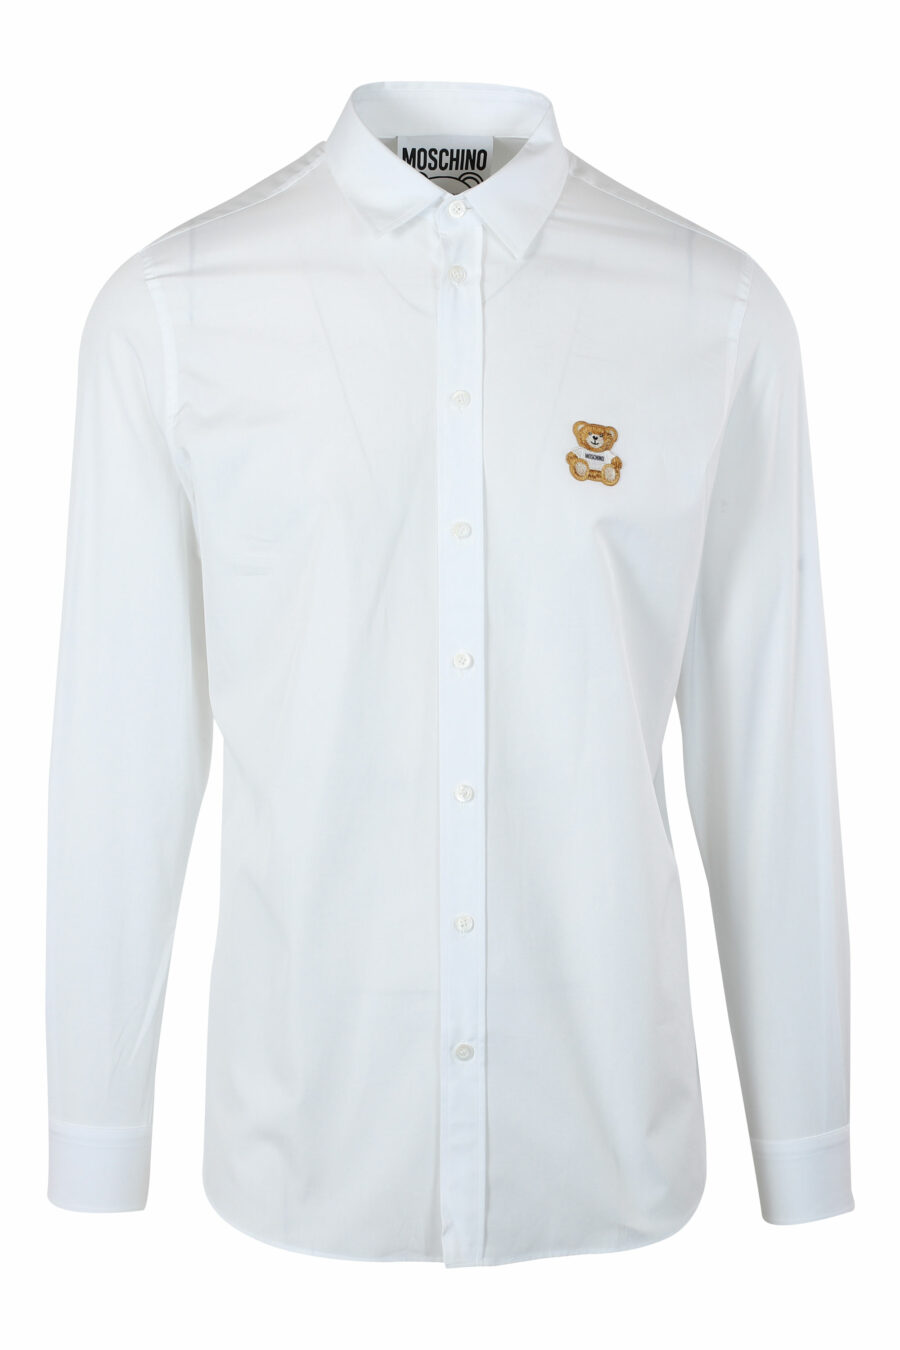 Chemise blanche avec logo teddy brodé - IMG 9621